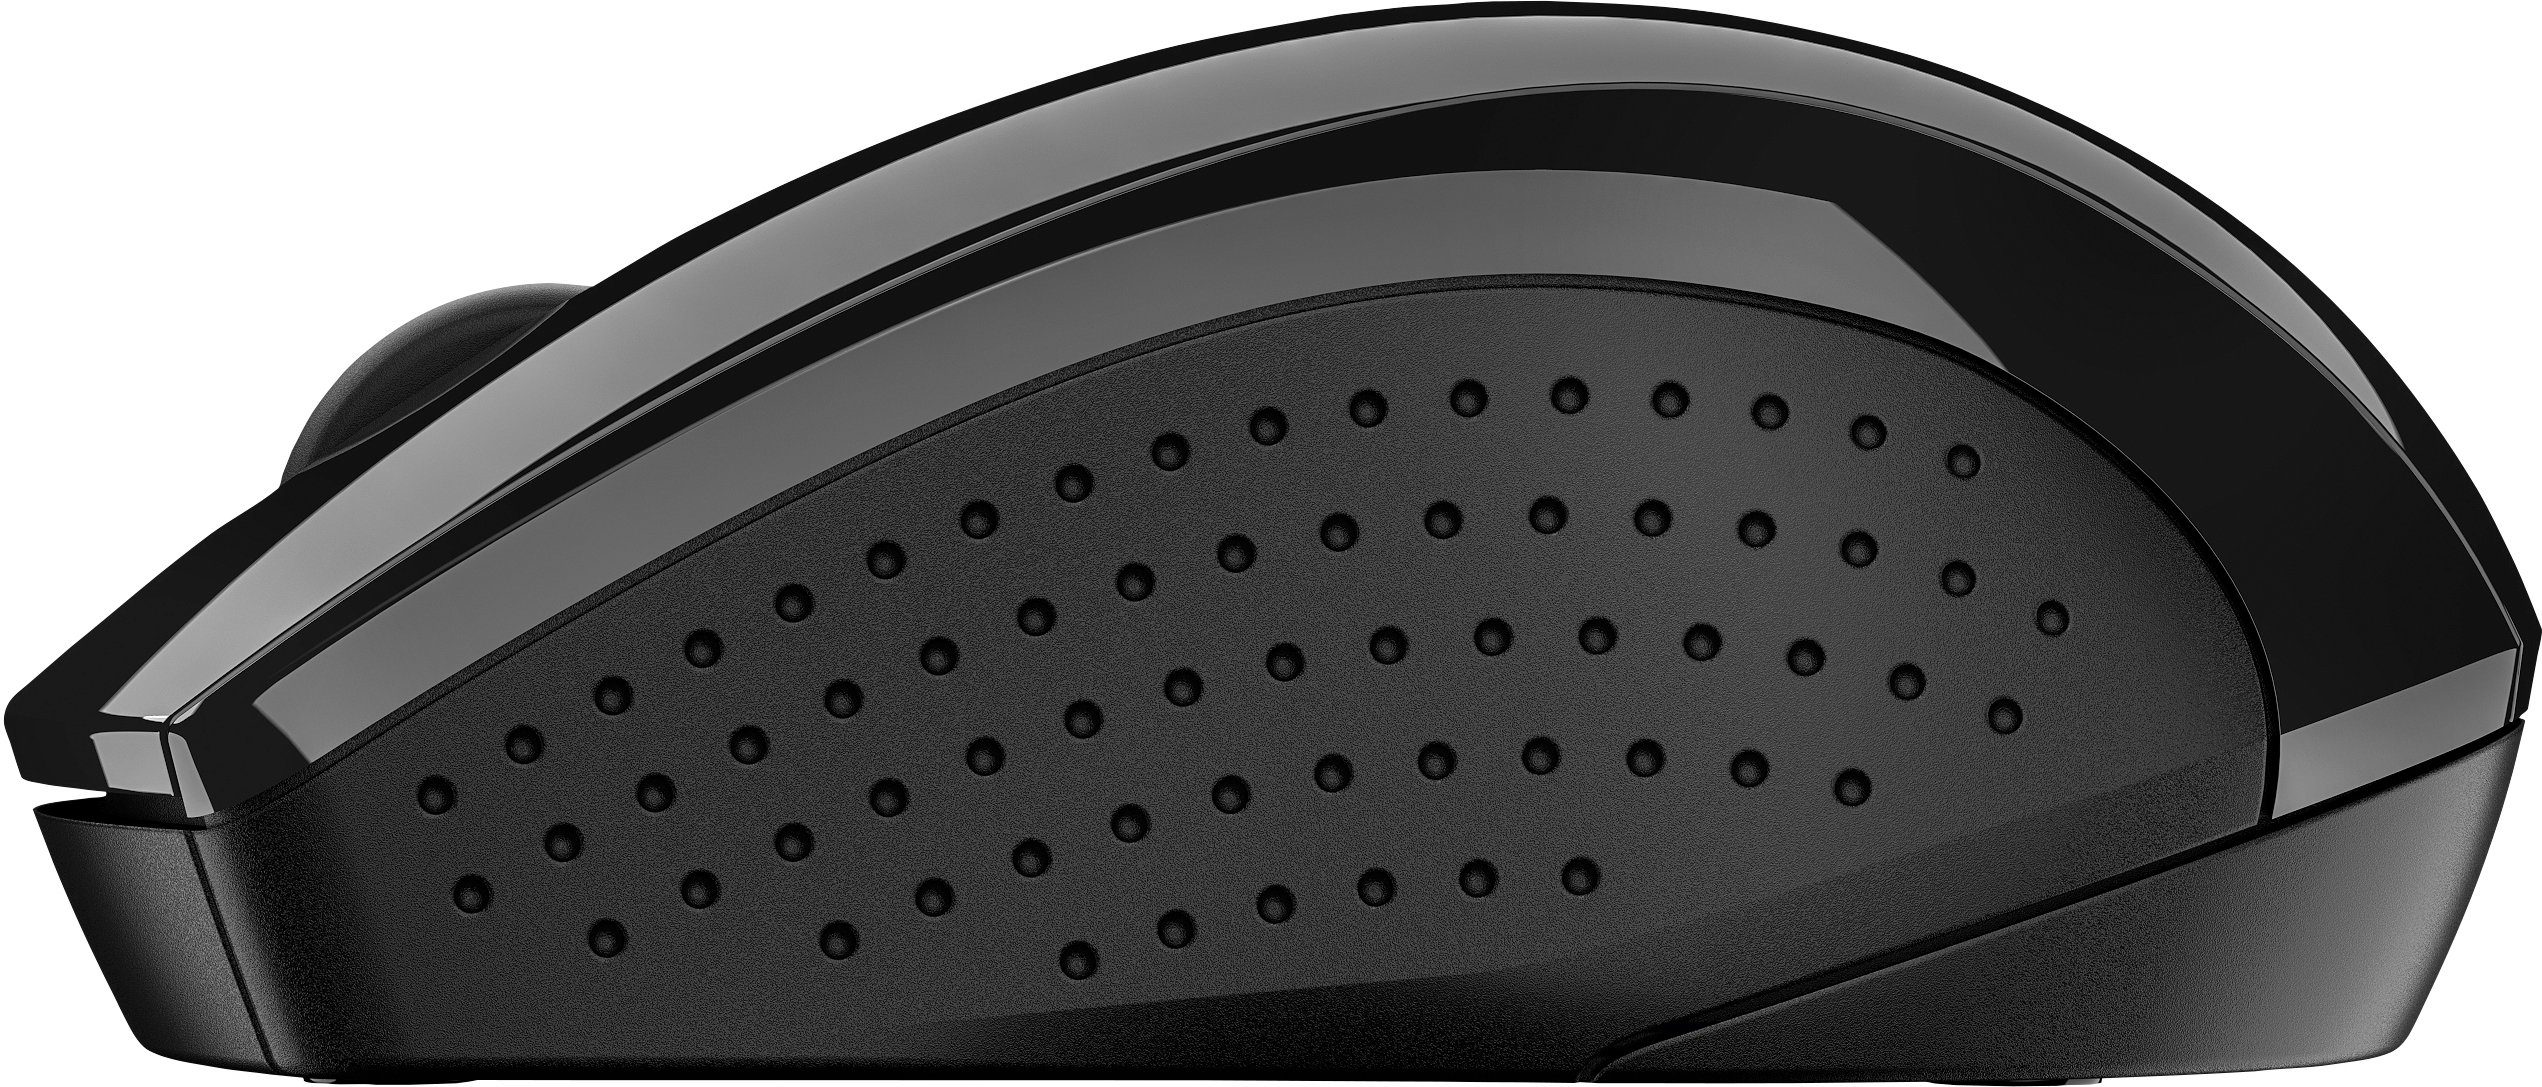 220 Maus Wireless) Mouse Wireless (RF Silent HP